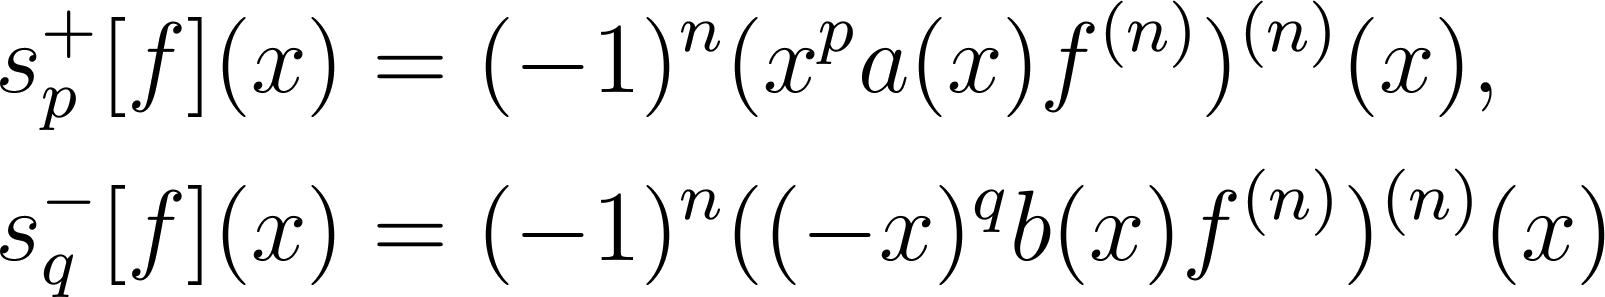 \begin{equation*}
\begin{aligned}
s_p^+[f](x)&=(-1)^n(x^pa(x)f^{(n)})^{(n)}(x)...
...
s_q^-[f](x)&=(-1)^n((-x)^qb(x)f^{(n)})^{(n)}(x)
\end{aligned}
\end{equation*}